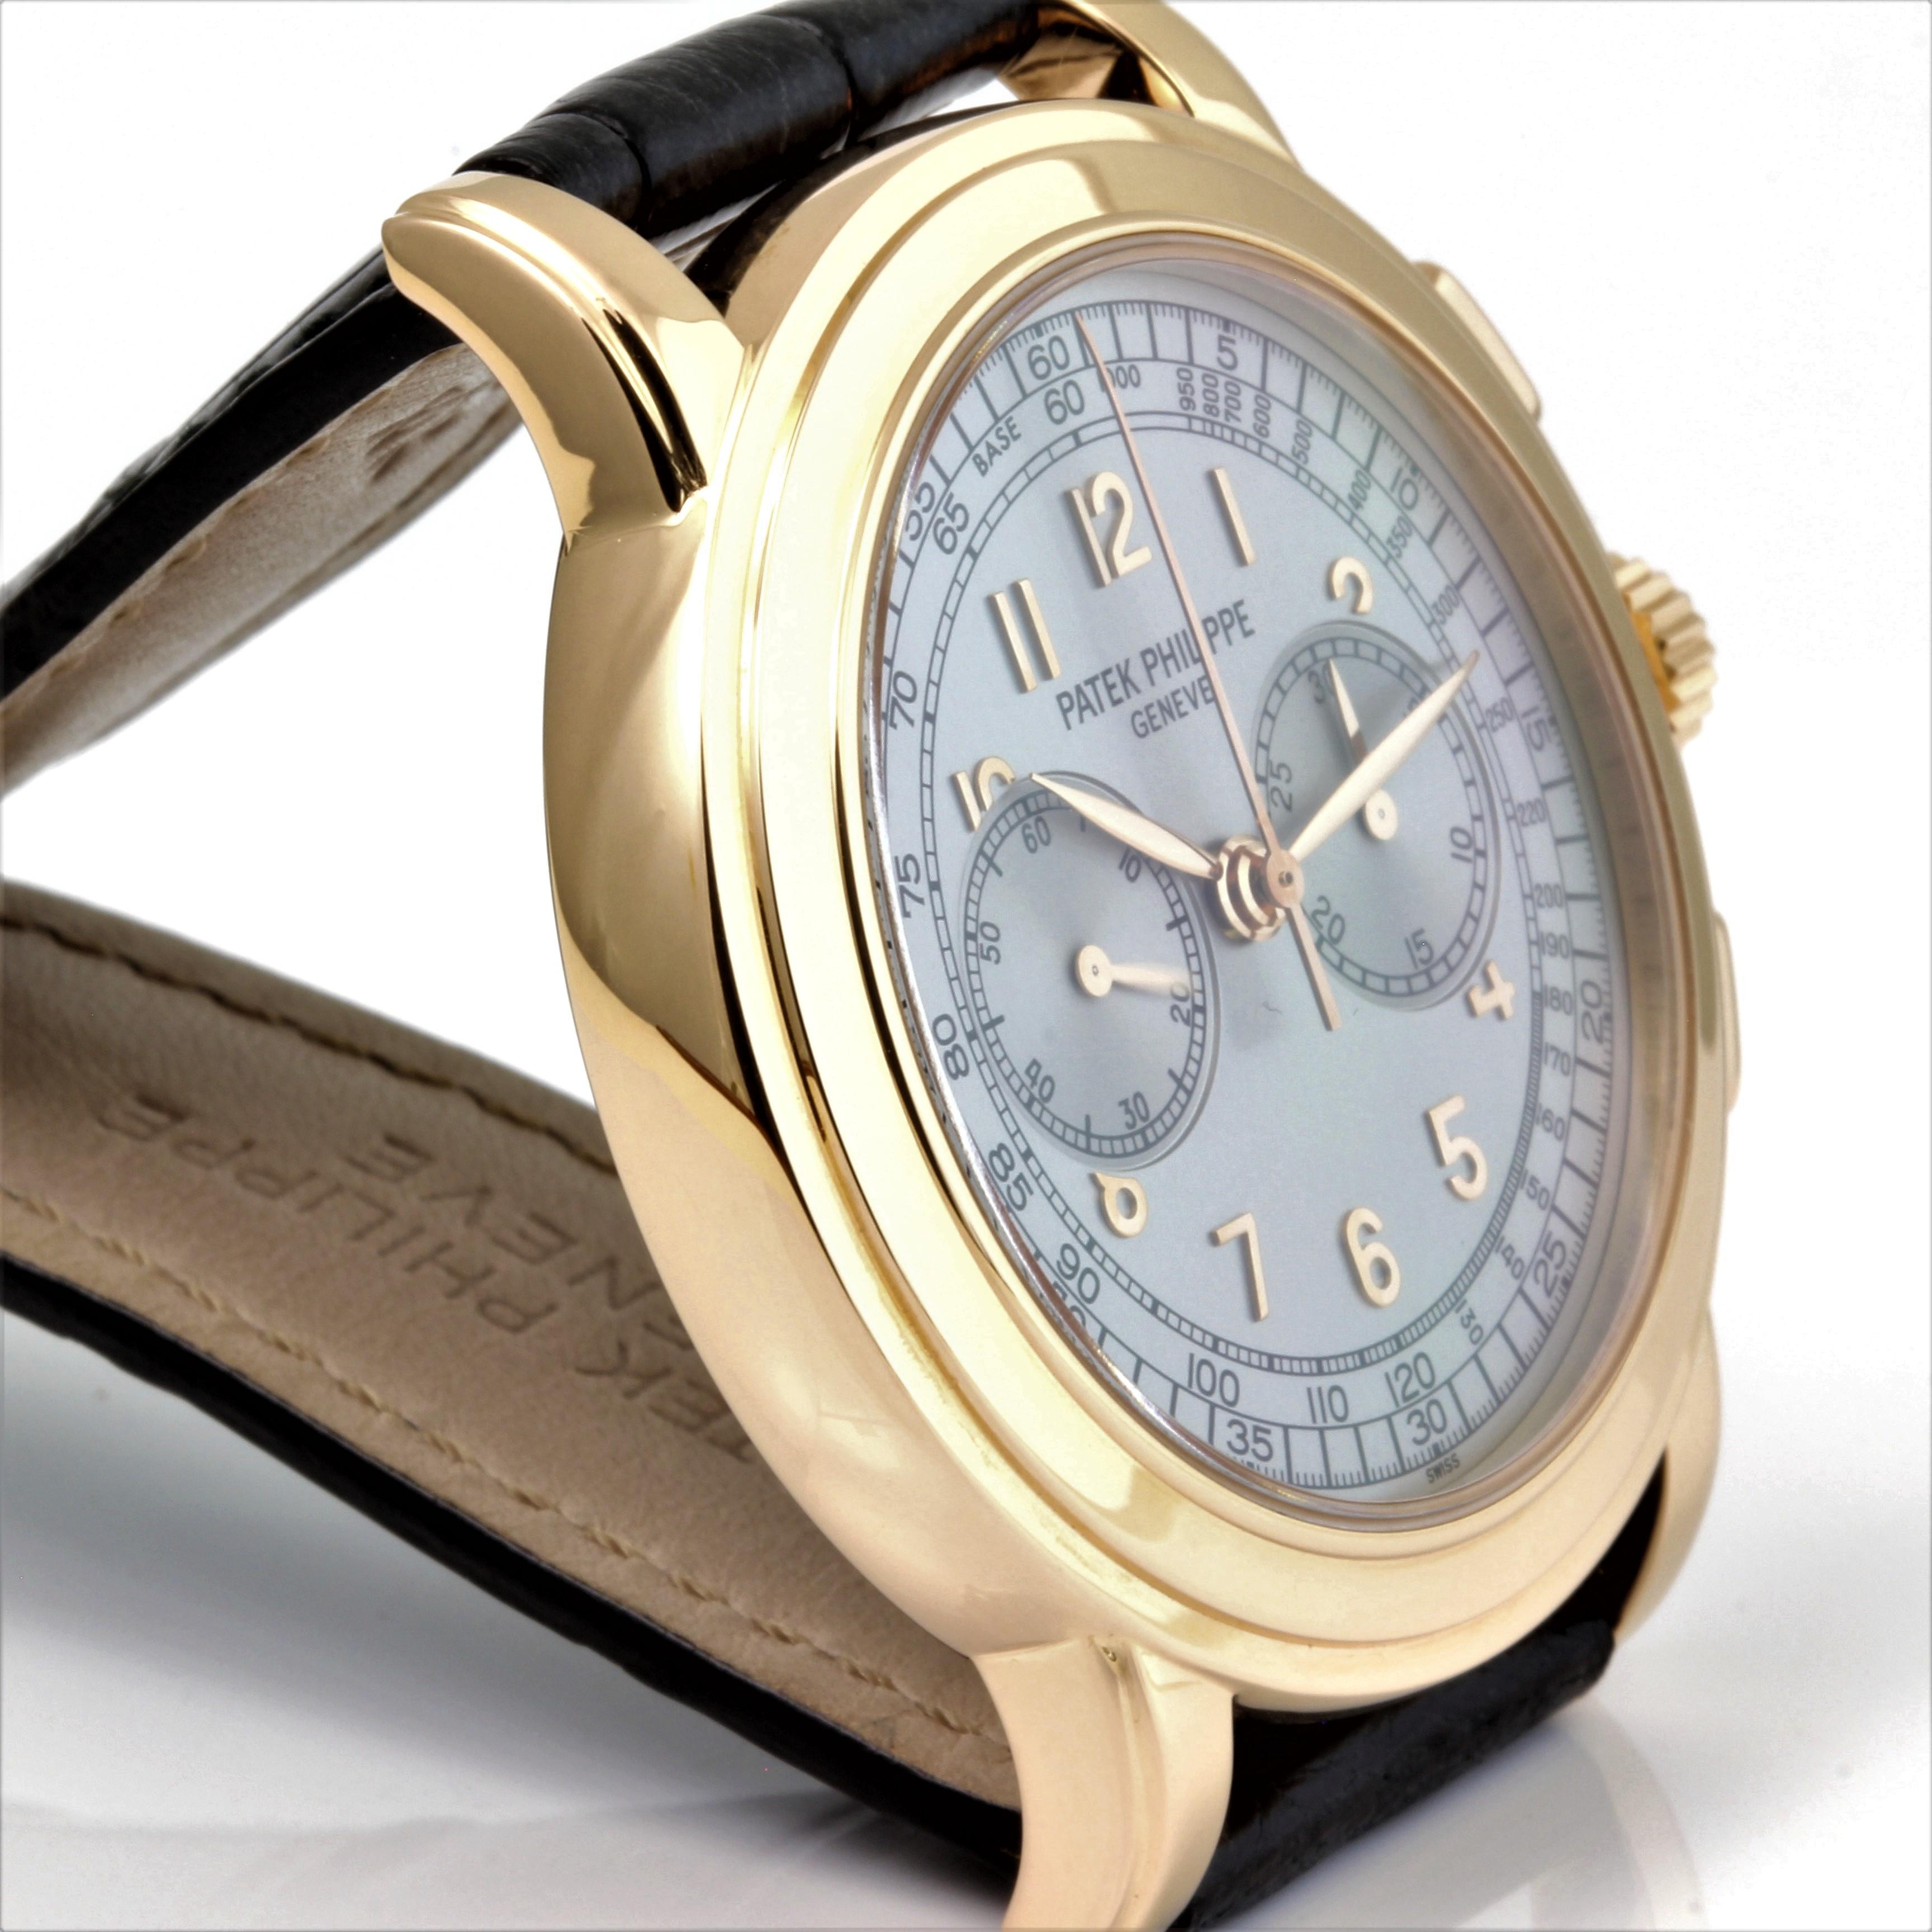 Patek Philippe 5070R- Rose Gold Chronograph Watch, Case, circa 2004 1